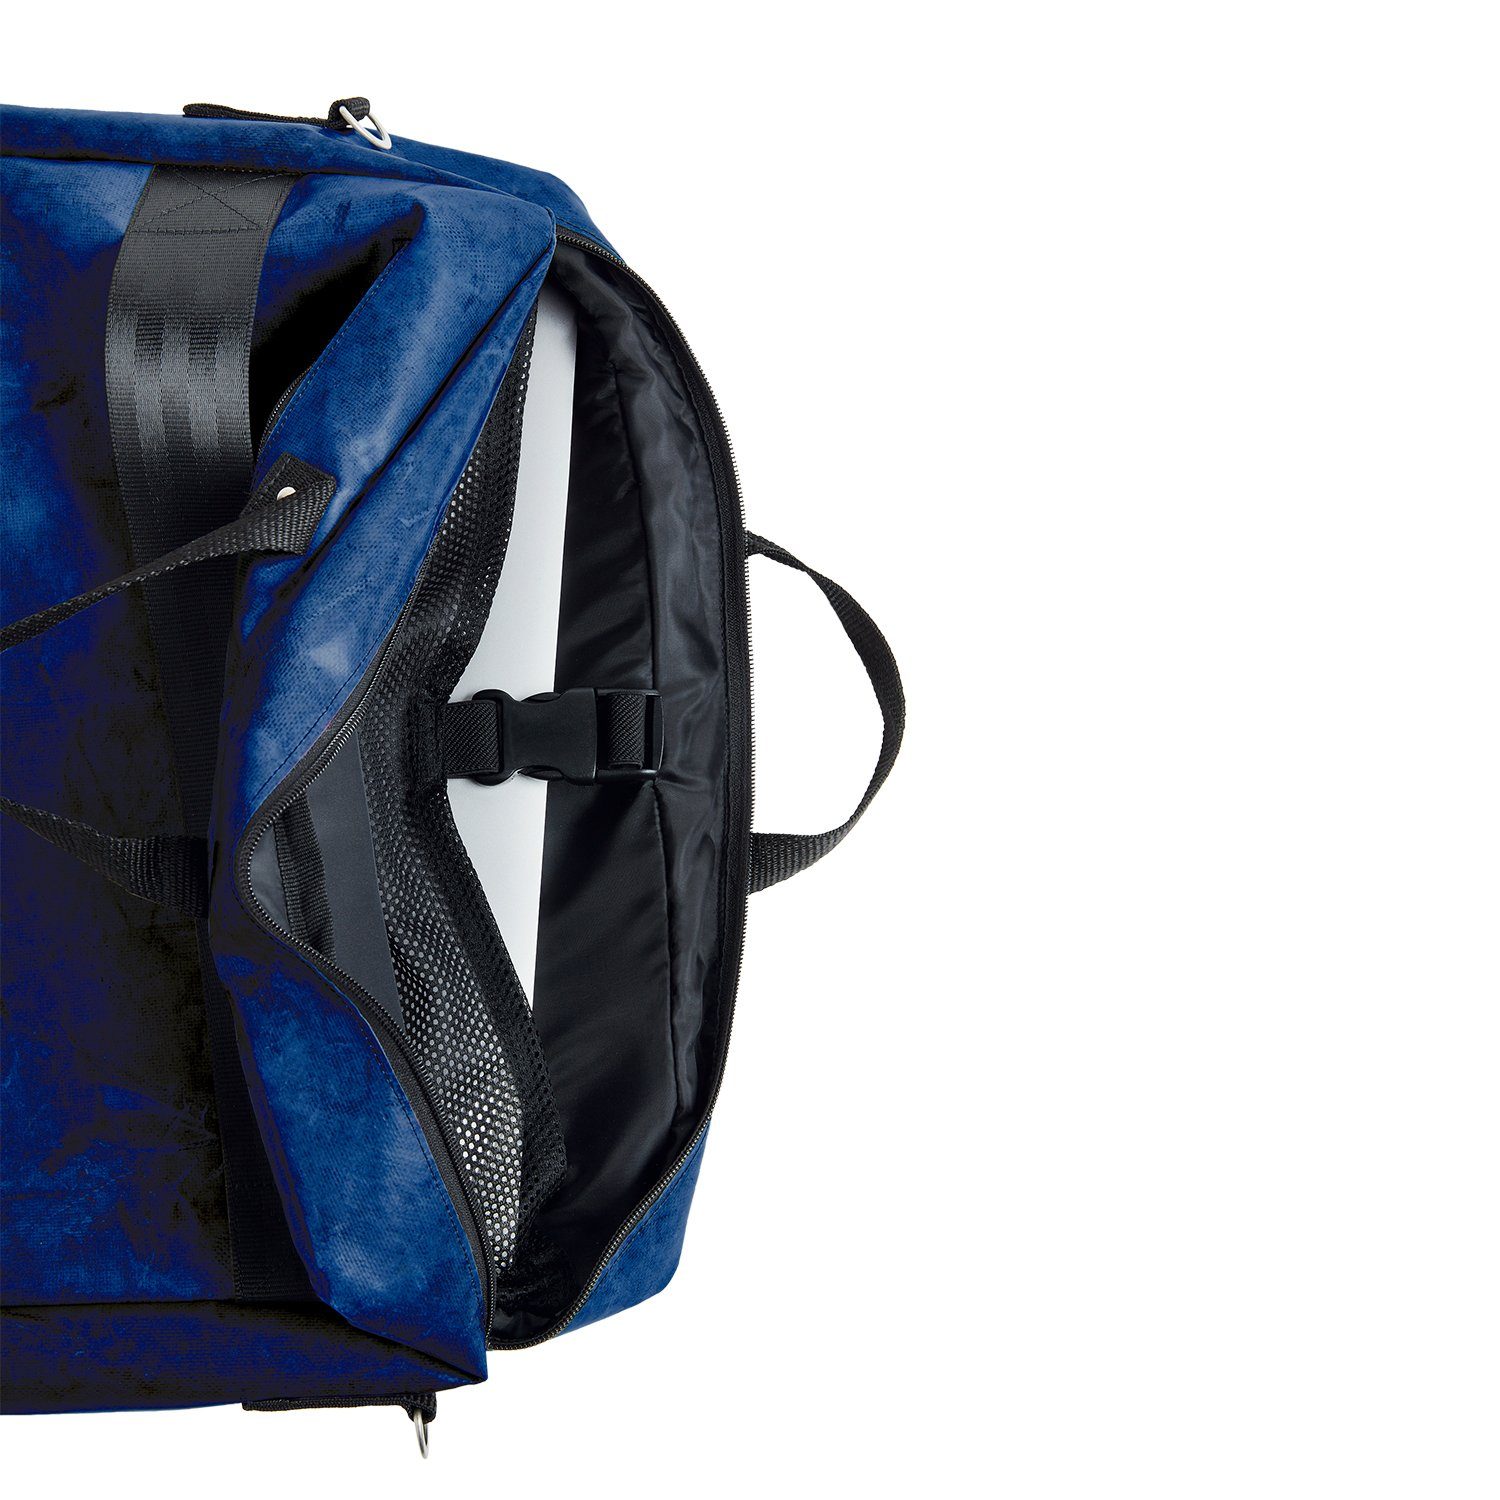 Air_plane Bag to blau, Messenger Life im praktischen Bag Design